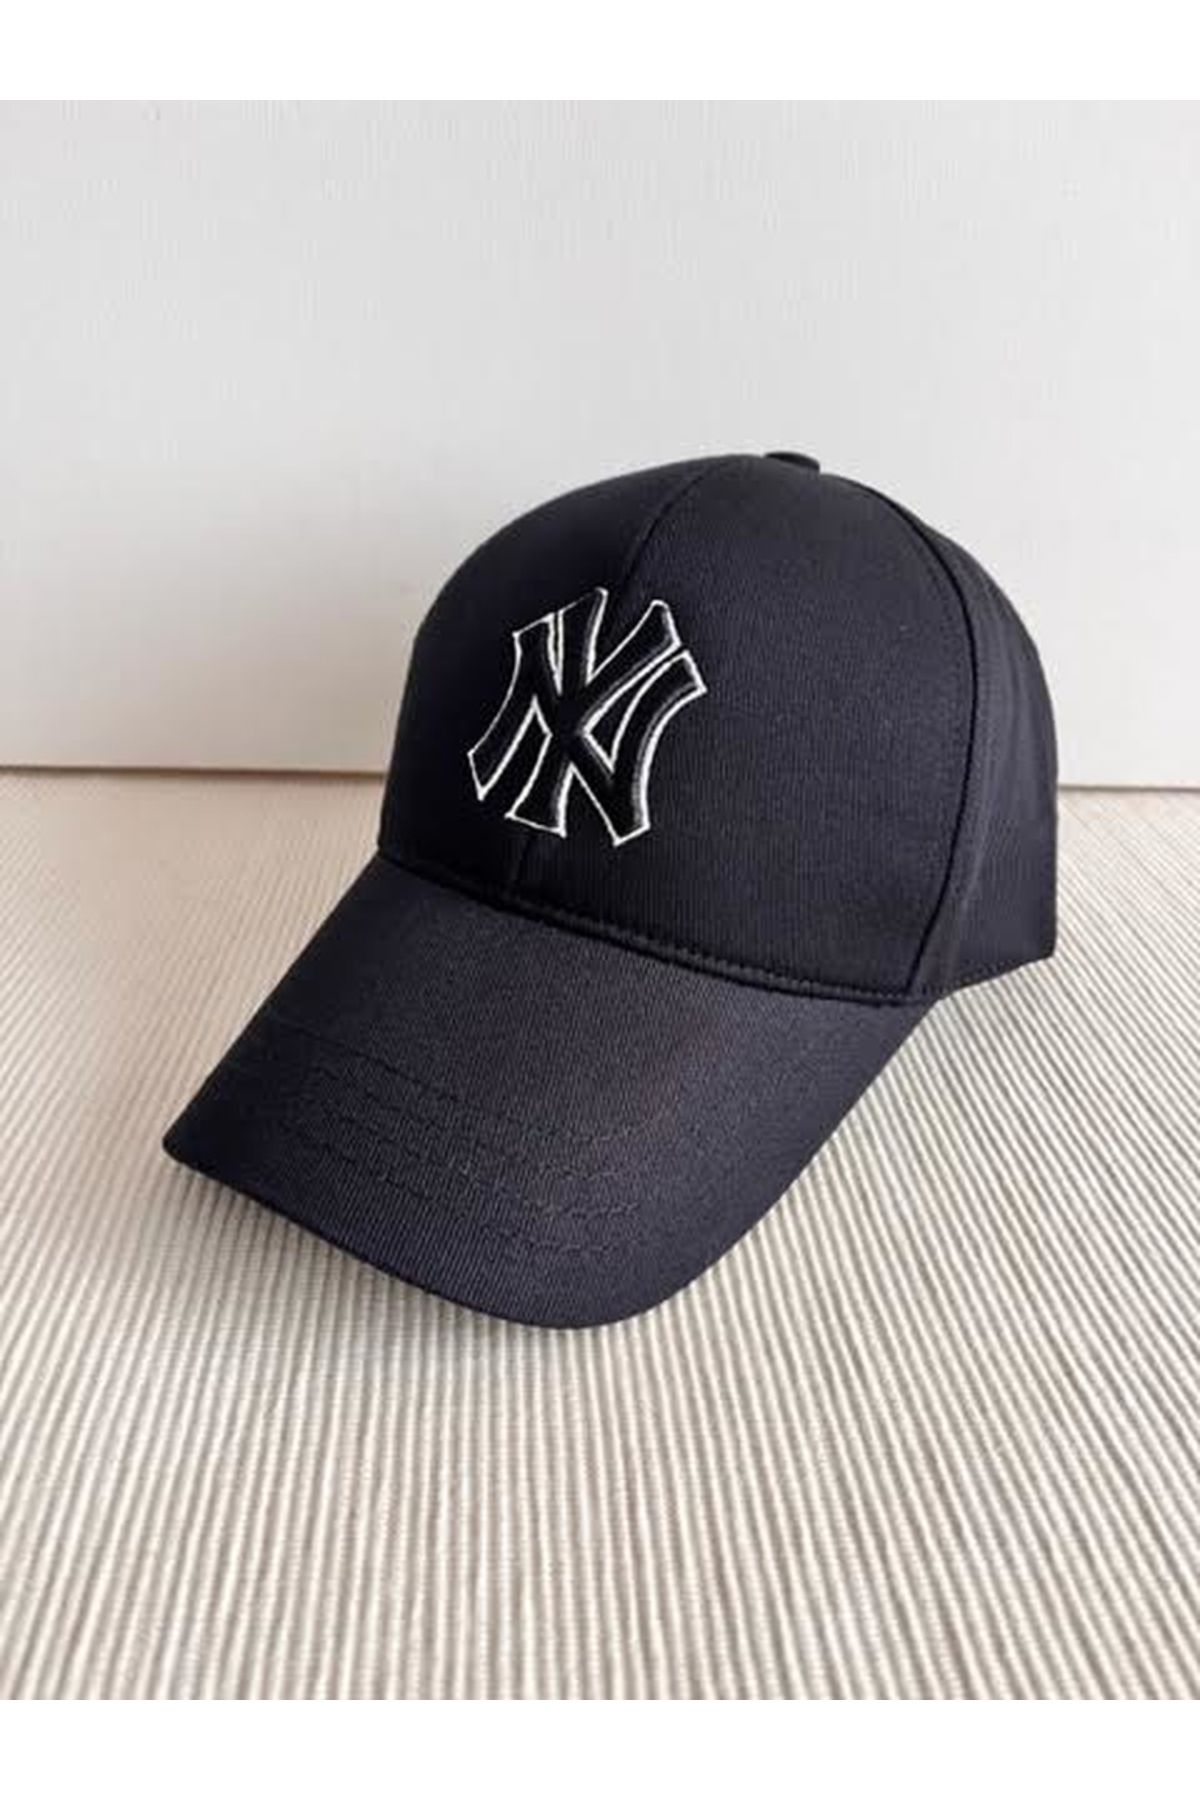 CosmoOutlet Ny New York Logolu Kontürlü Unisex Siyah Şapka